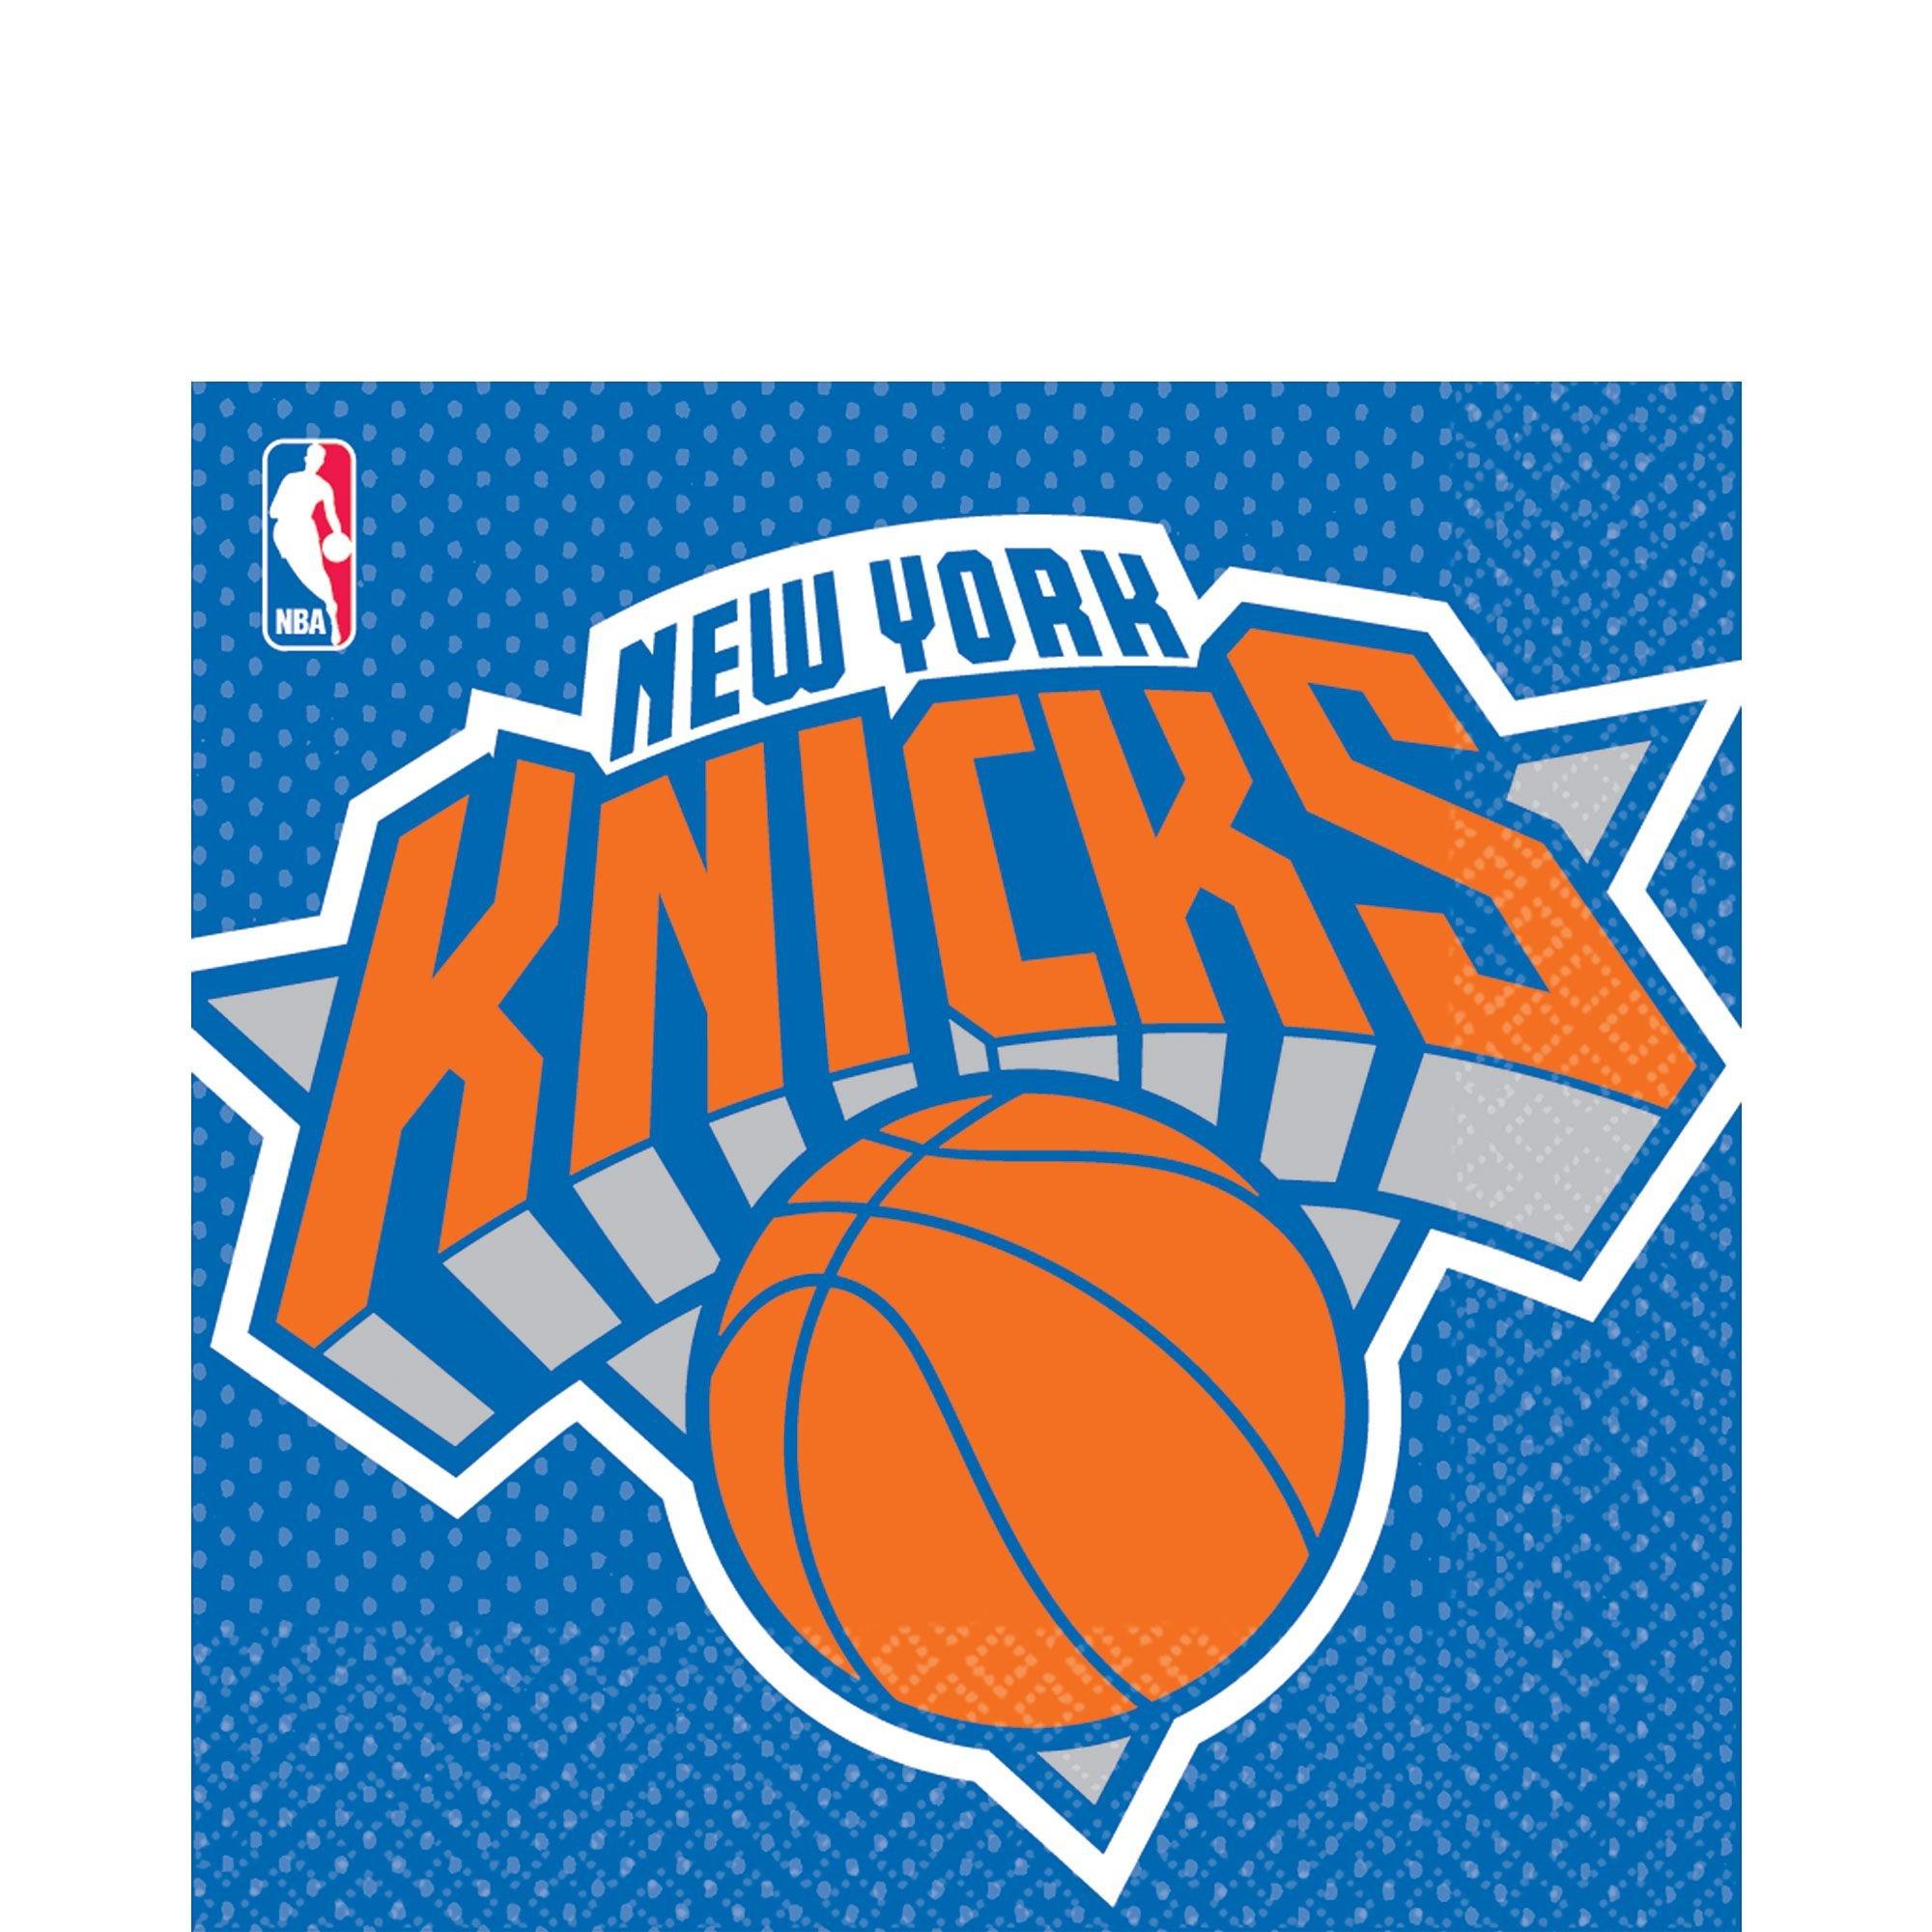 New York Knicks Basketball Design Wireless Mouse